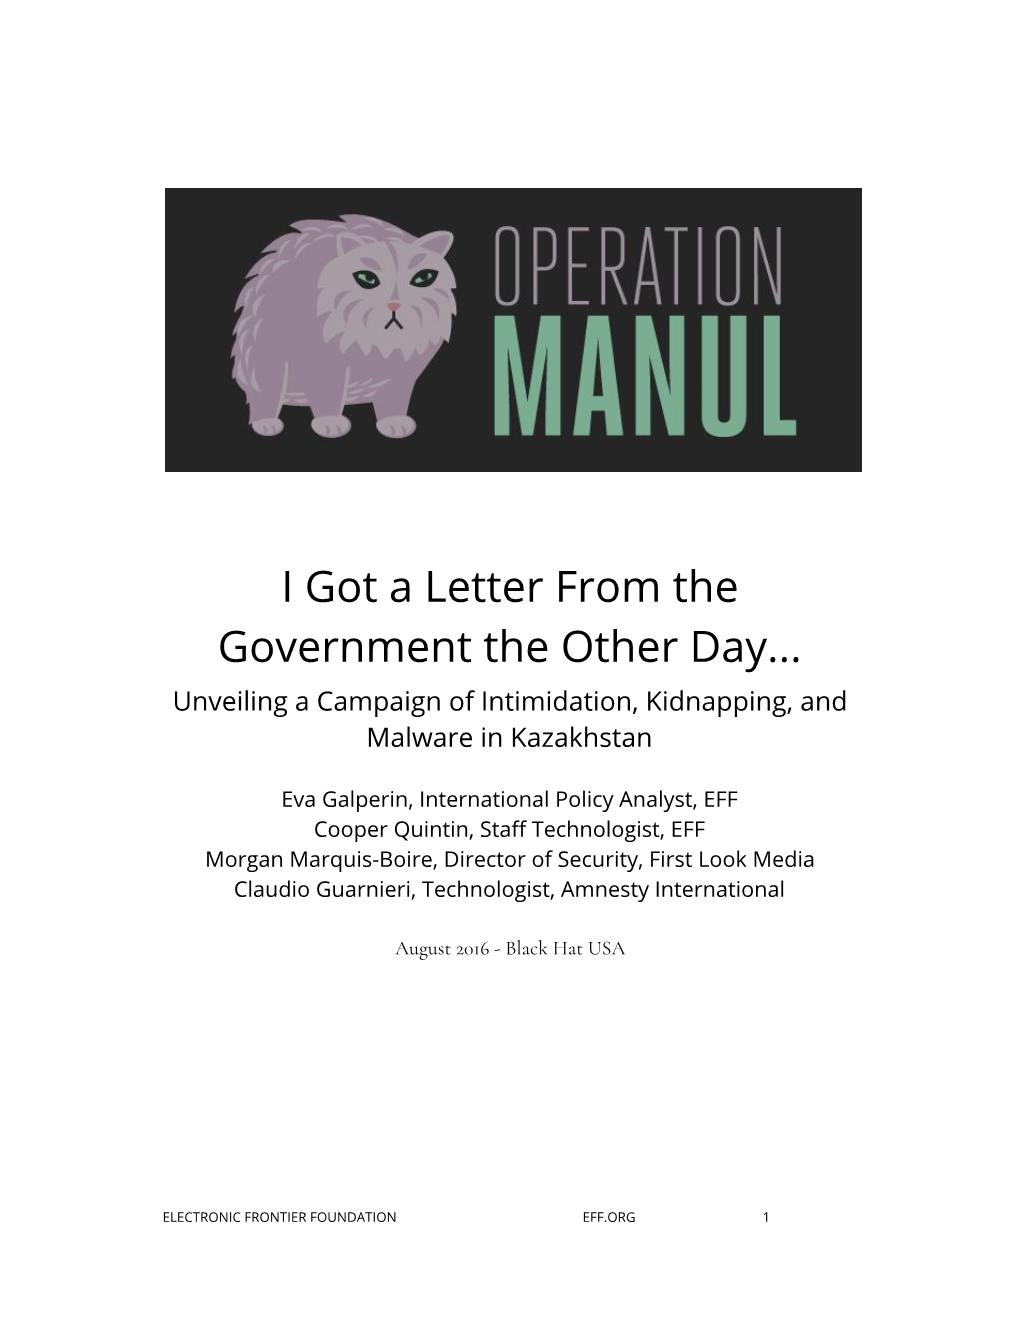 Operation Manul